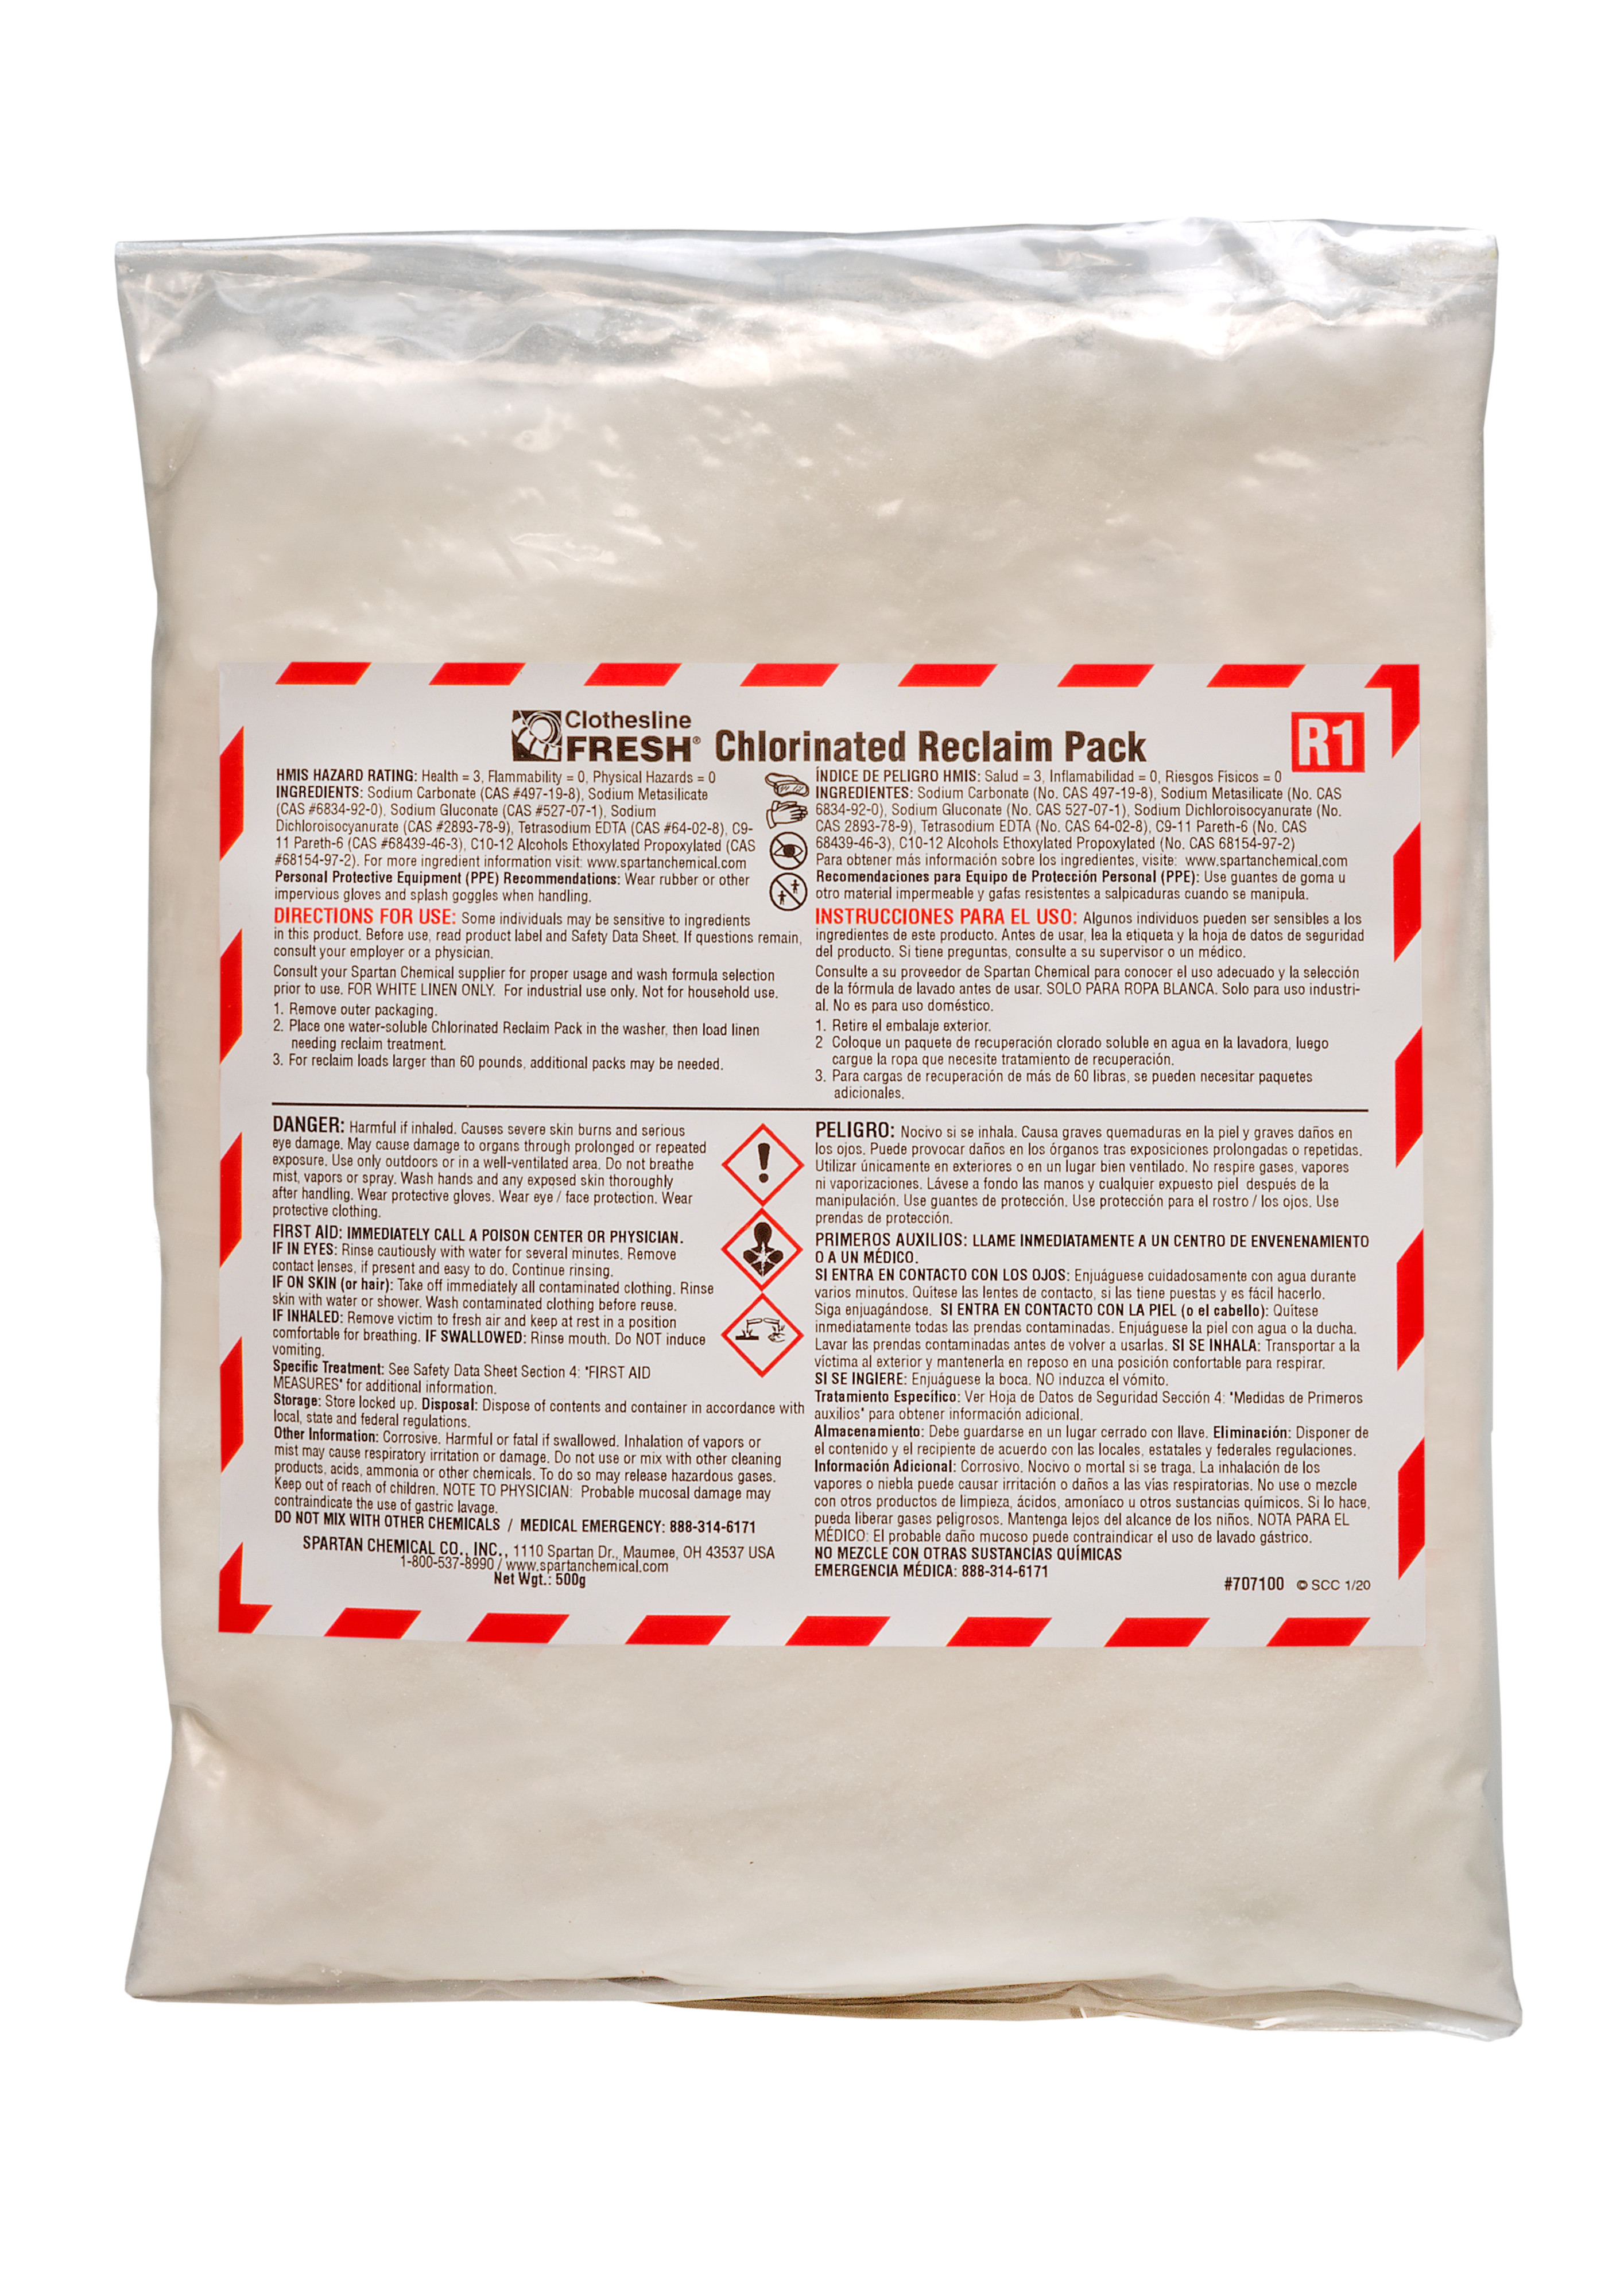 Spartan Chemical Company Clothesline Fresh Chlorinated Reclaim Pack R1, 10 ct. 500 gram